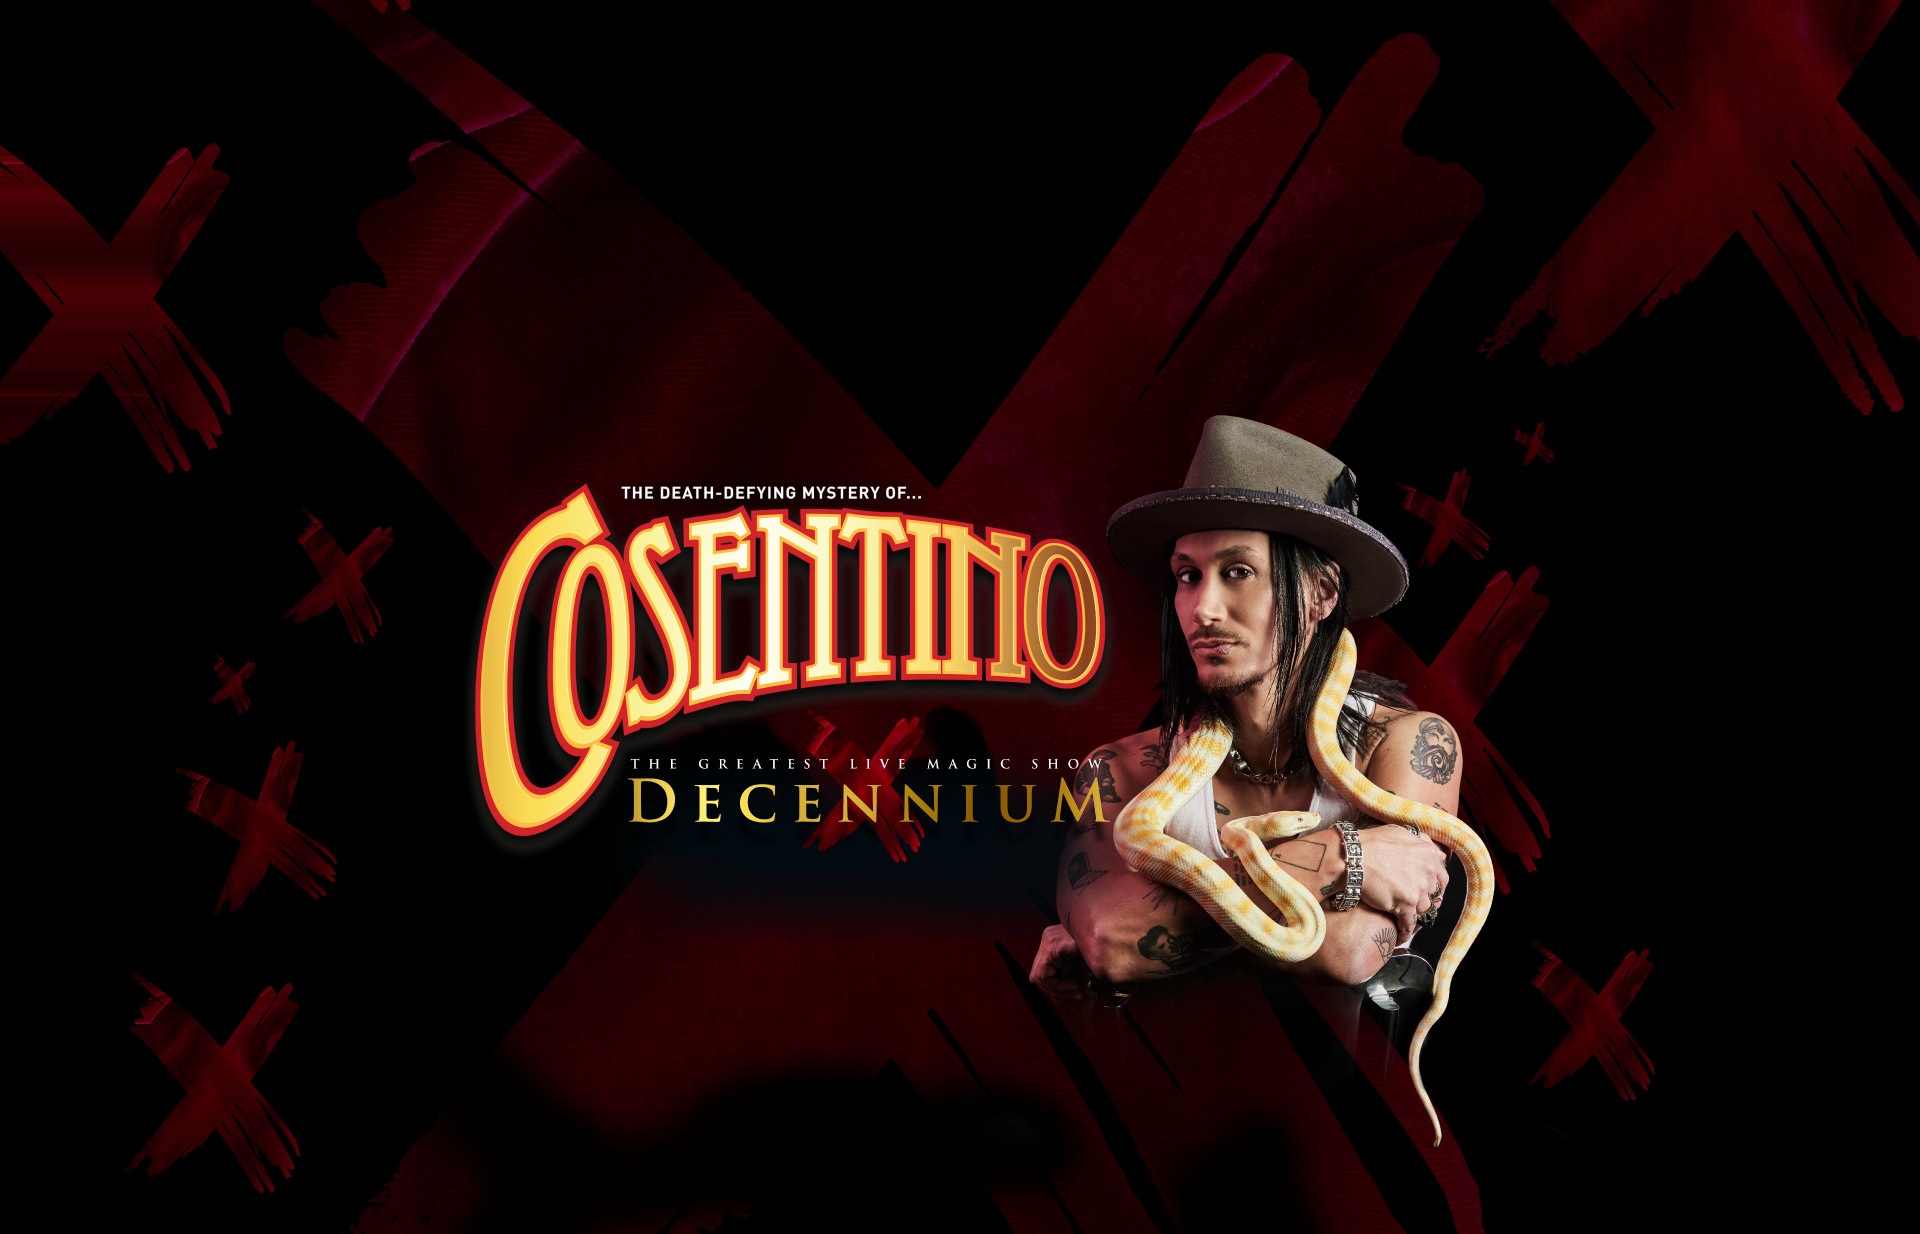 Cosentino: Decennium - The Greatest Live Magic Show